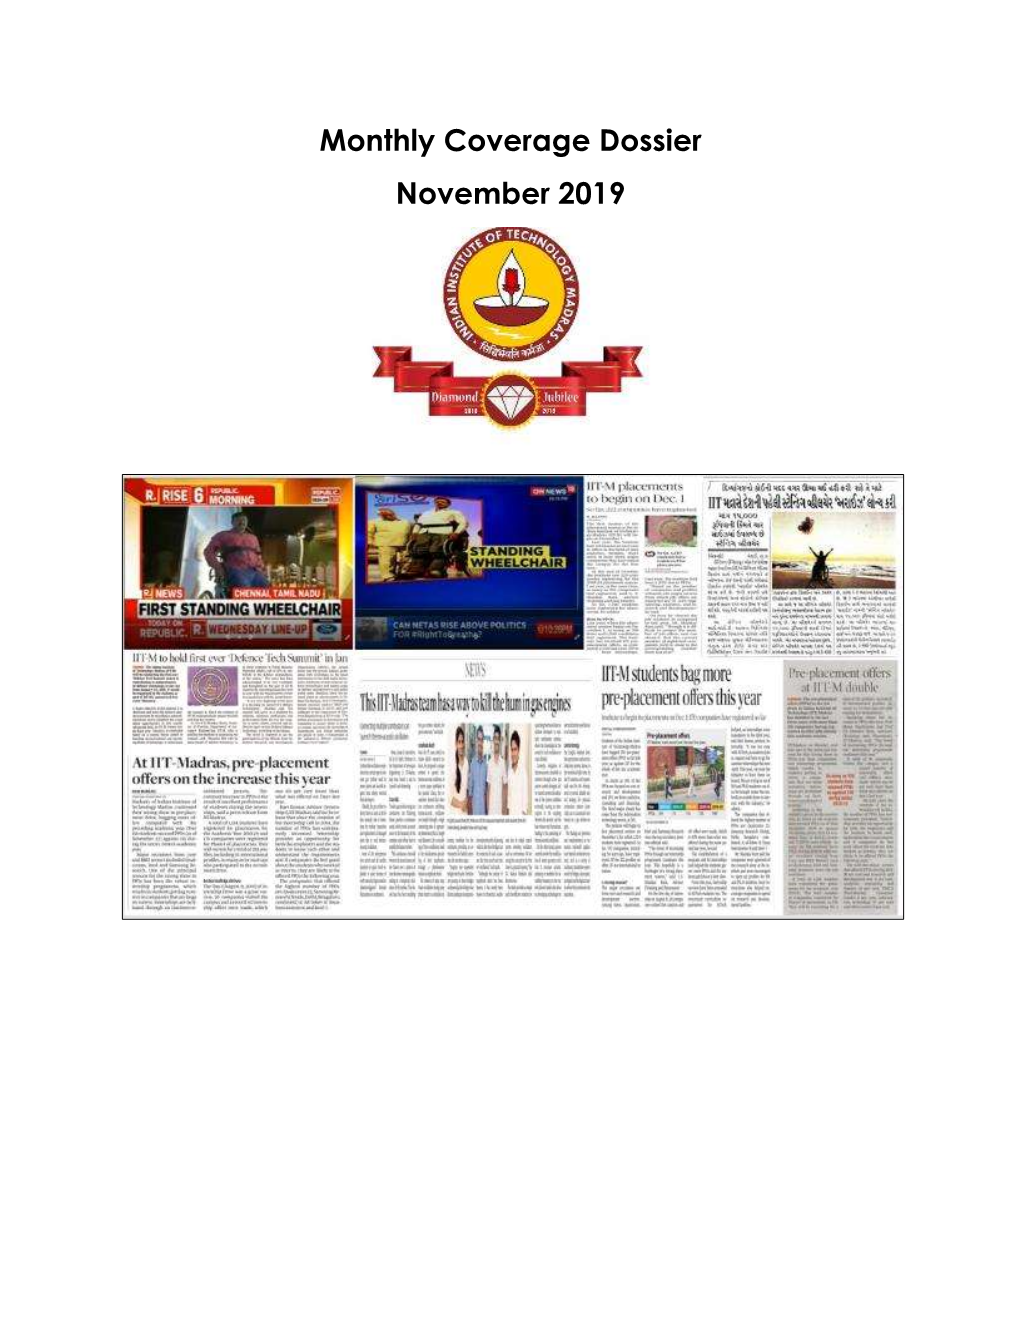 Monthly Coverage Dossier November 2019